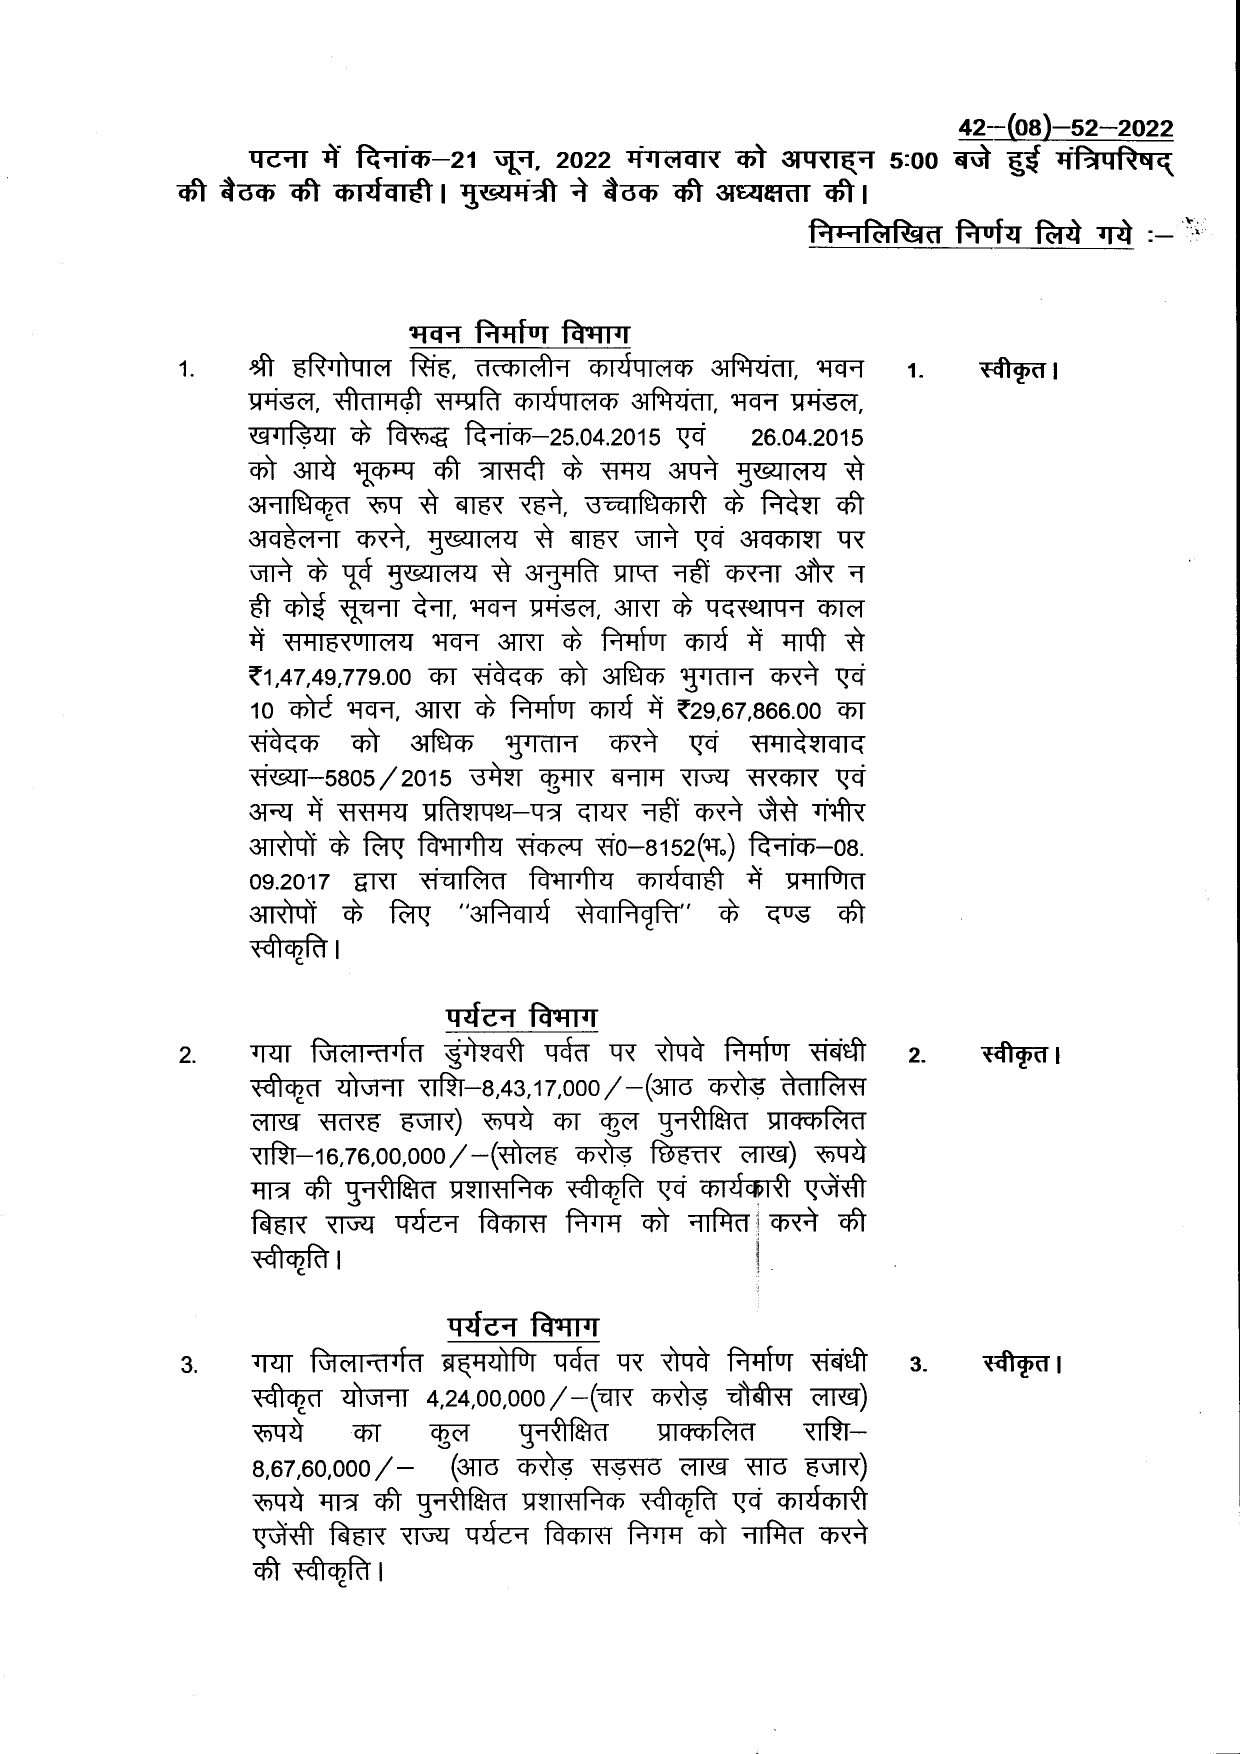 Nitish cabinet stamps total 13 agendas including construction of ropeway on Gaya Dungeshwari mountain 4